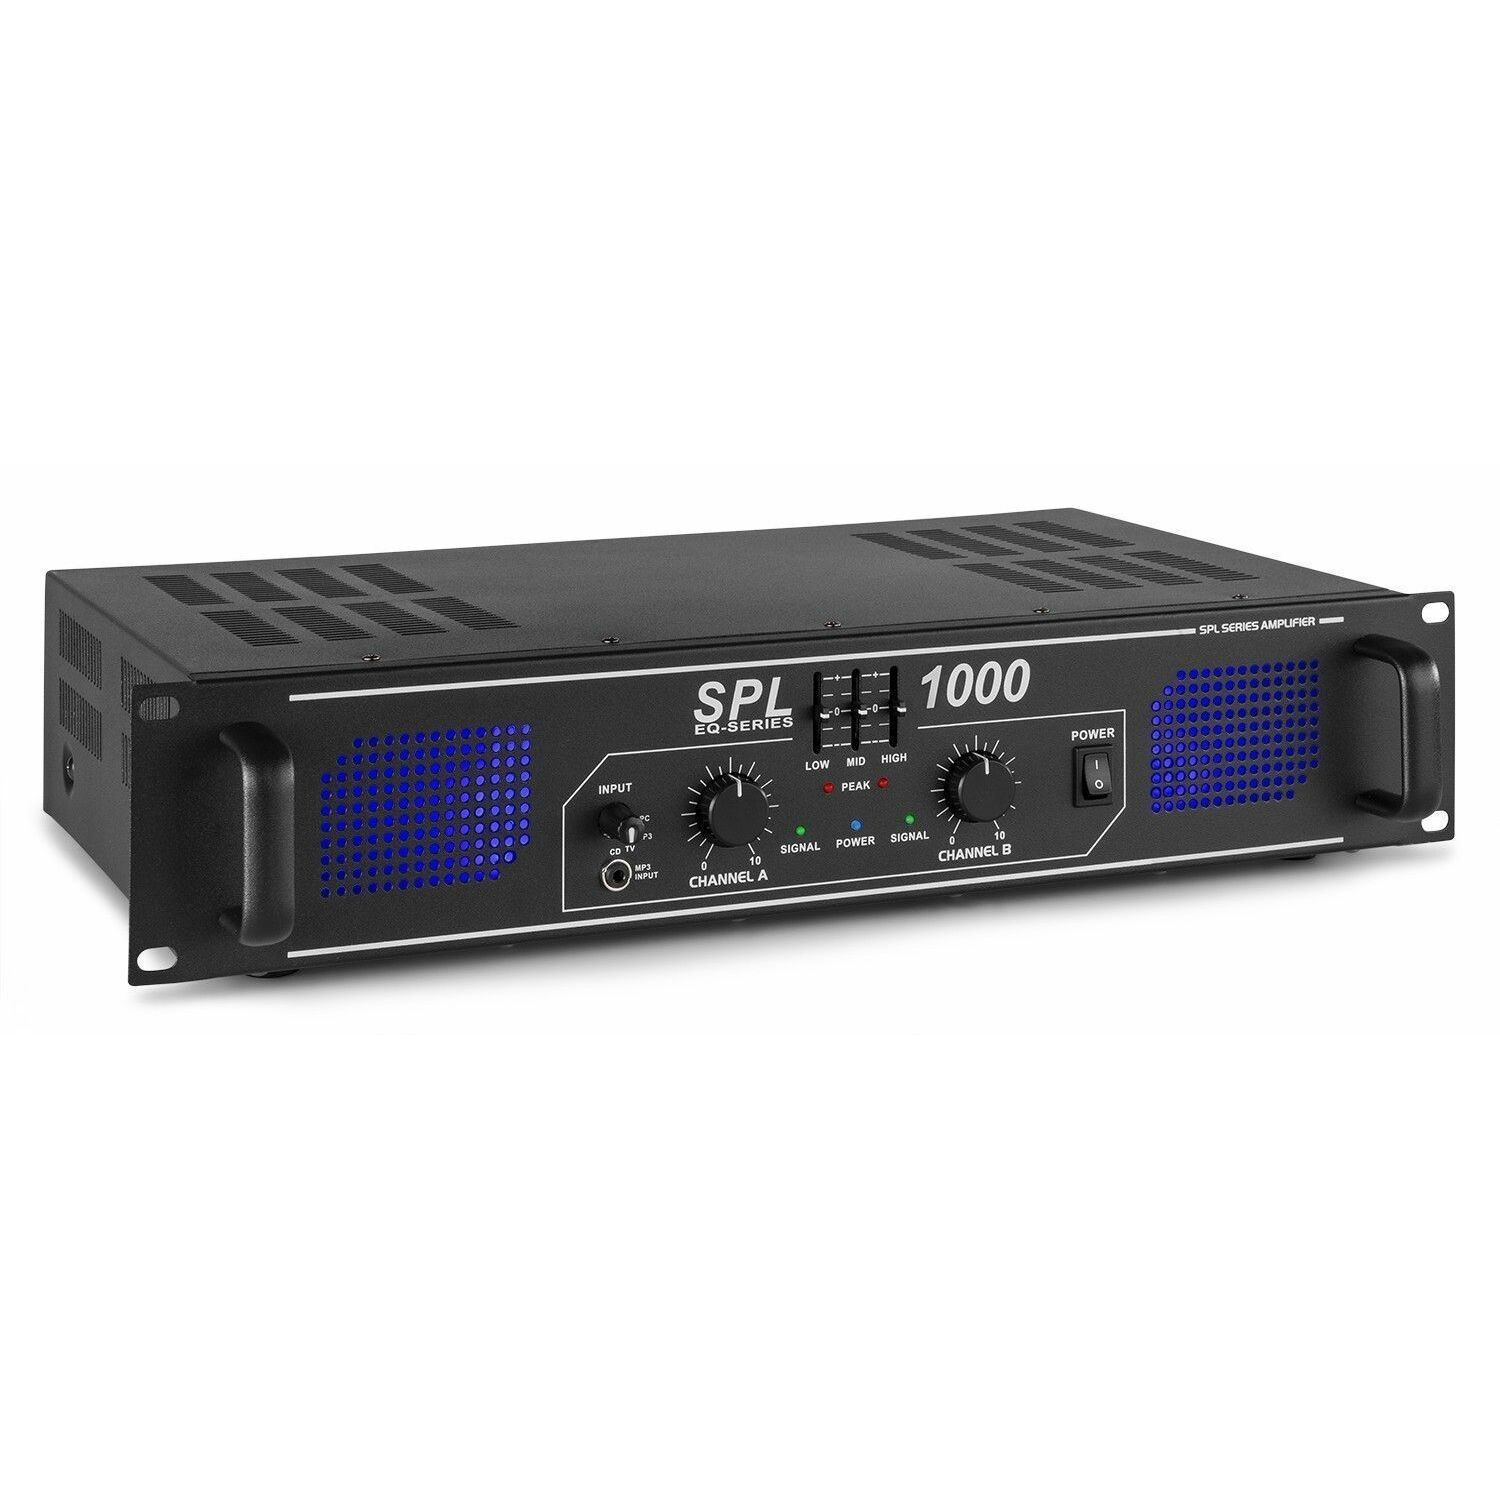 Retourdeal - SkyTec 2 x 500W DJ PA versterker SPL1000 met EQ